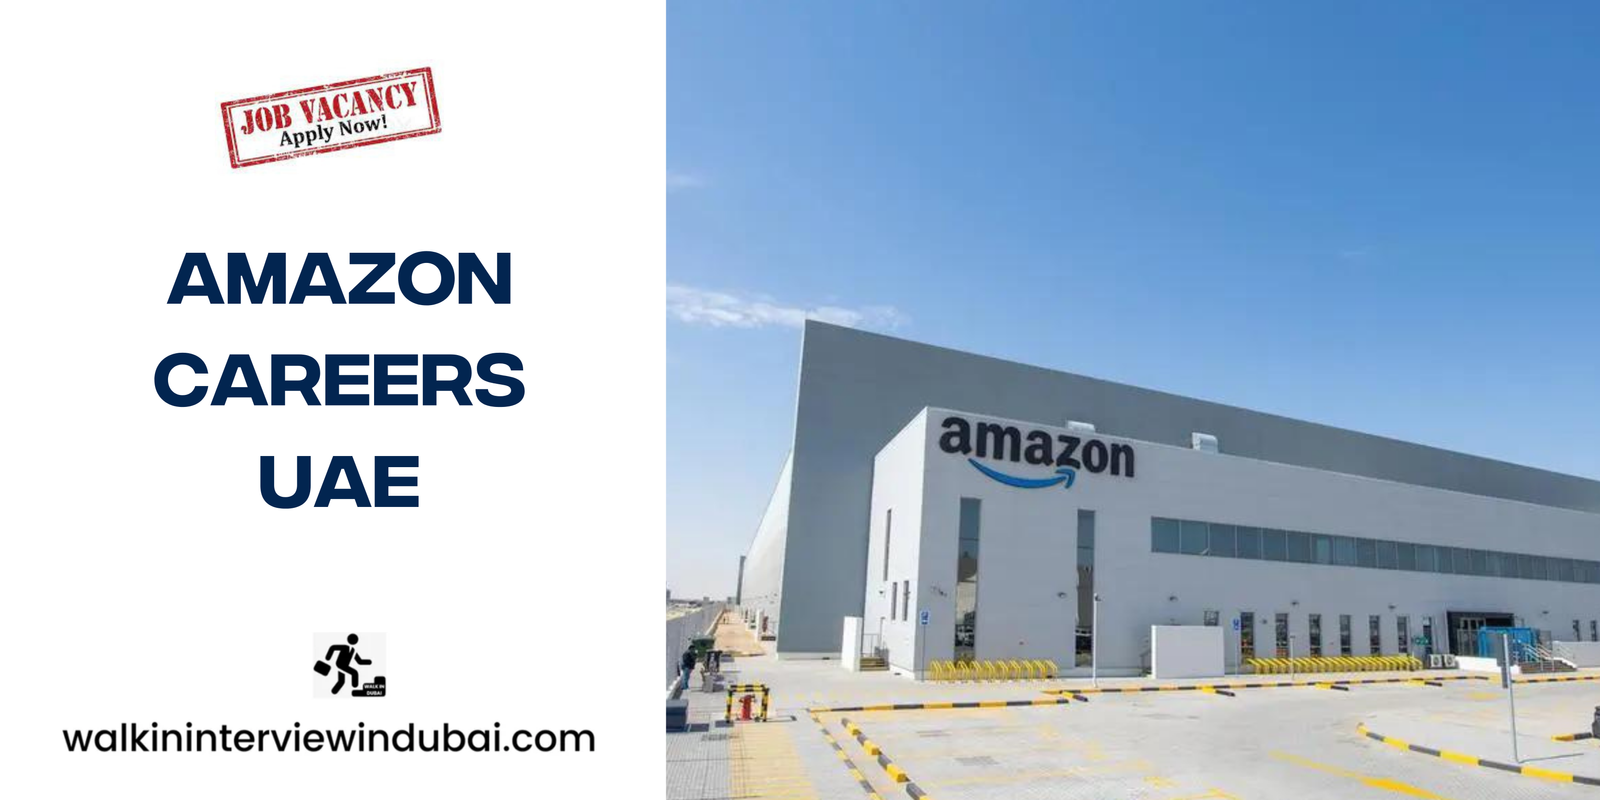 Amazon Careers in UAE